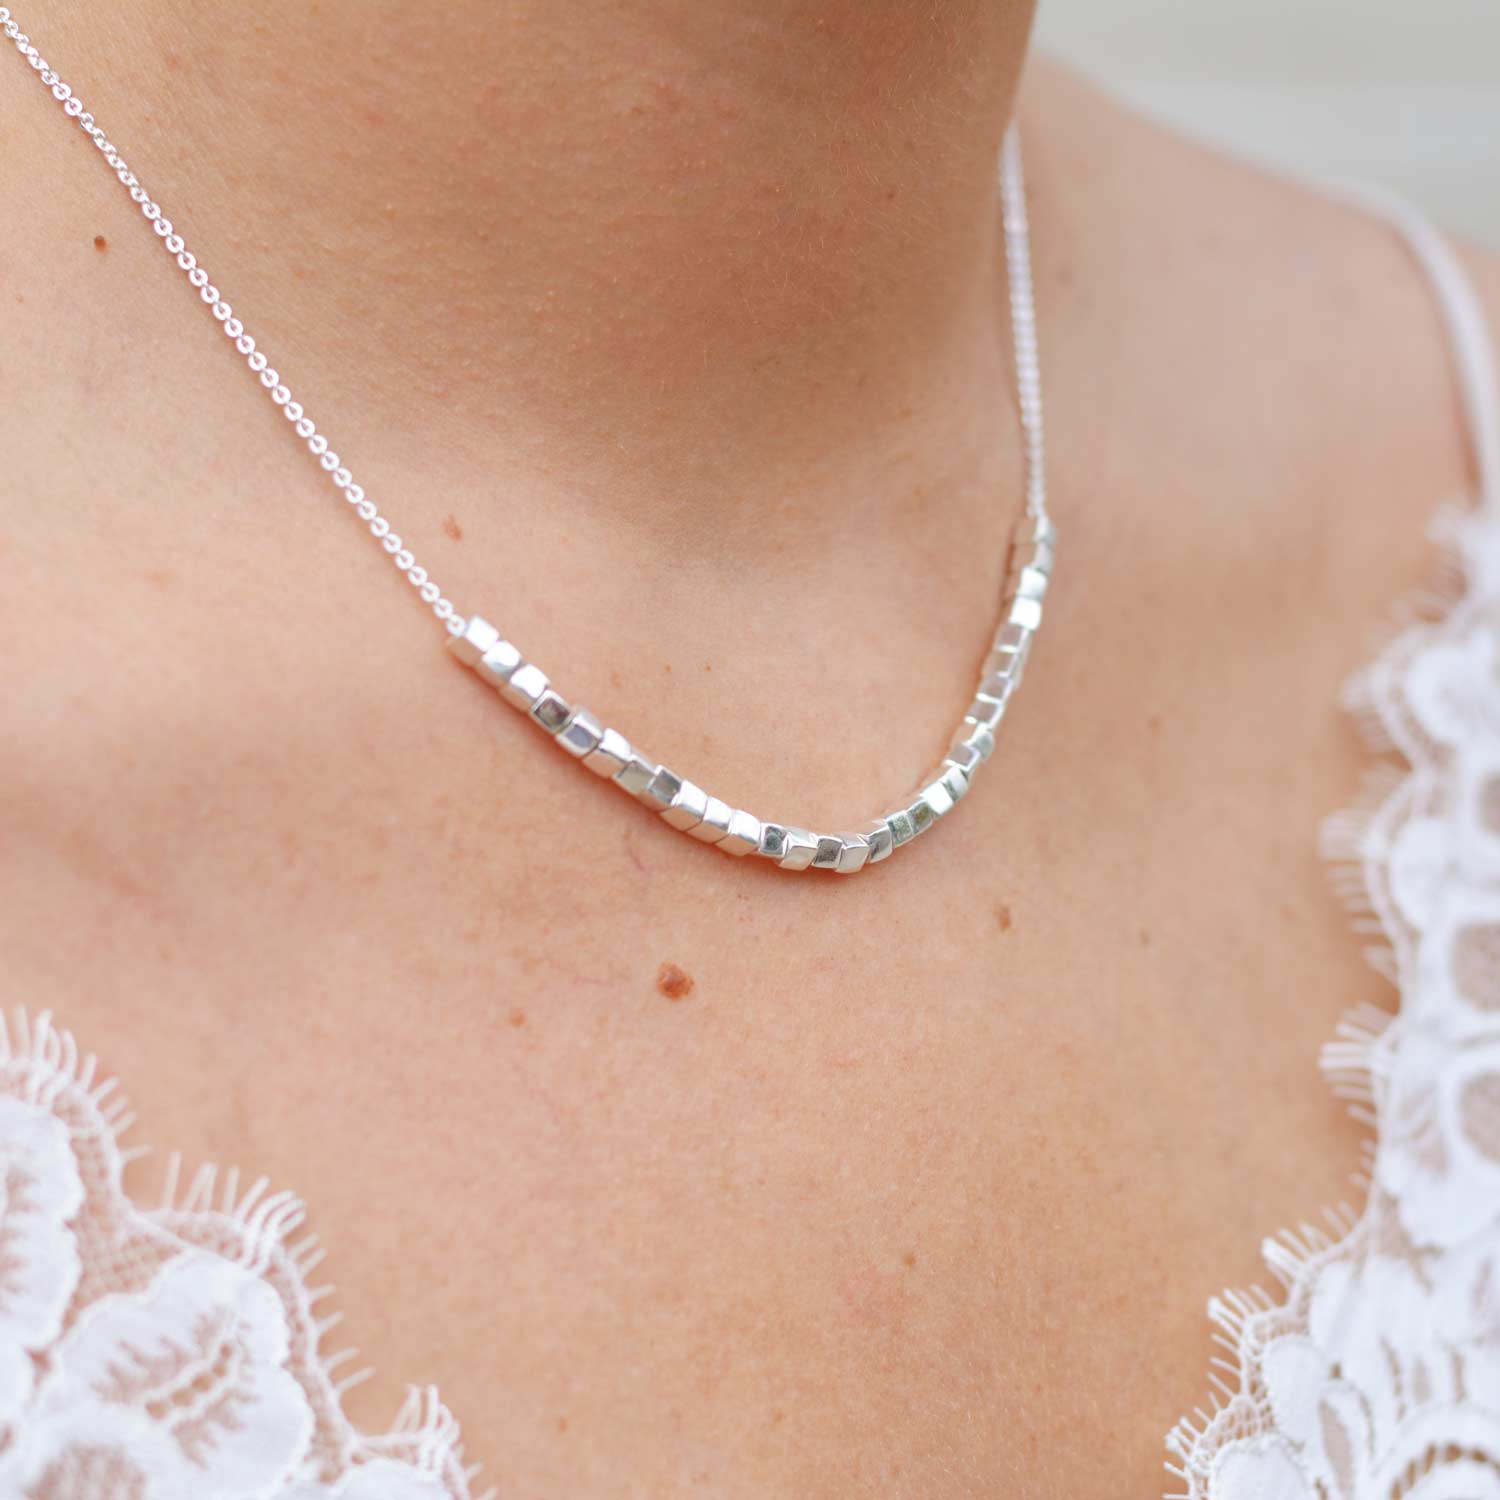 Silver cubed Necklace, geometric, unique British design, minimalist